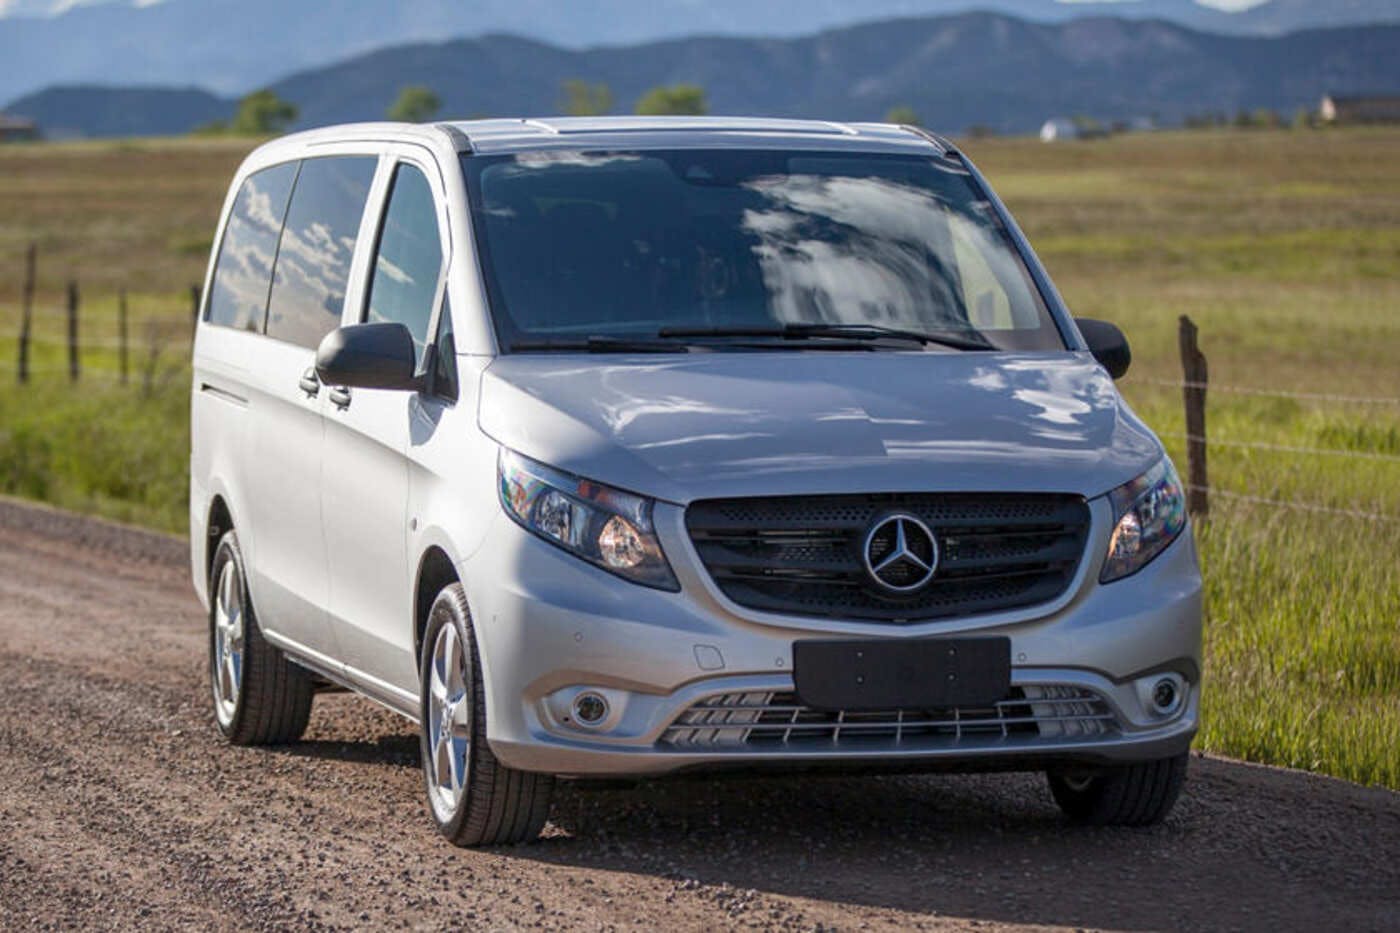 2020 Mercedes Benz Metris Passenger Van Comparisons Reviews